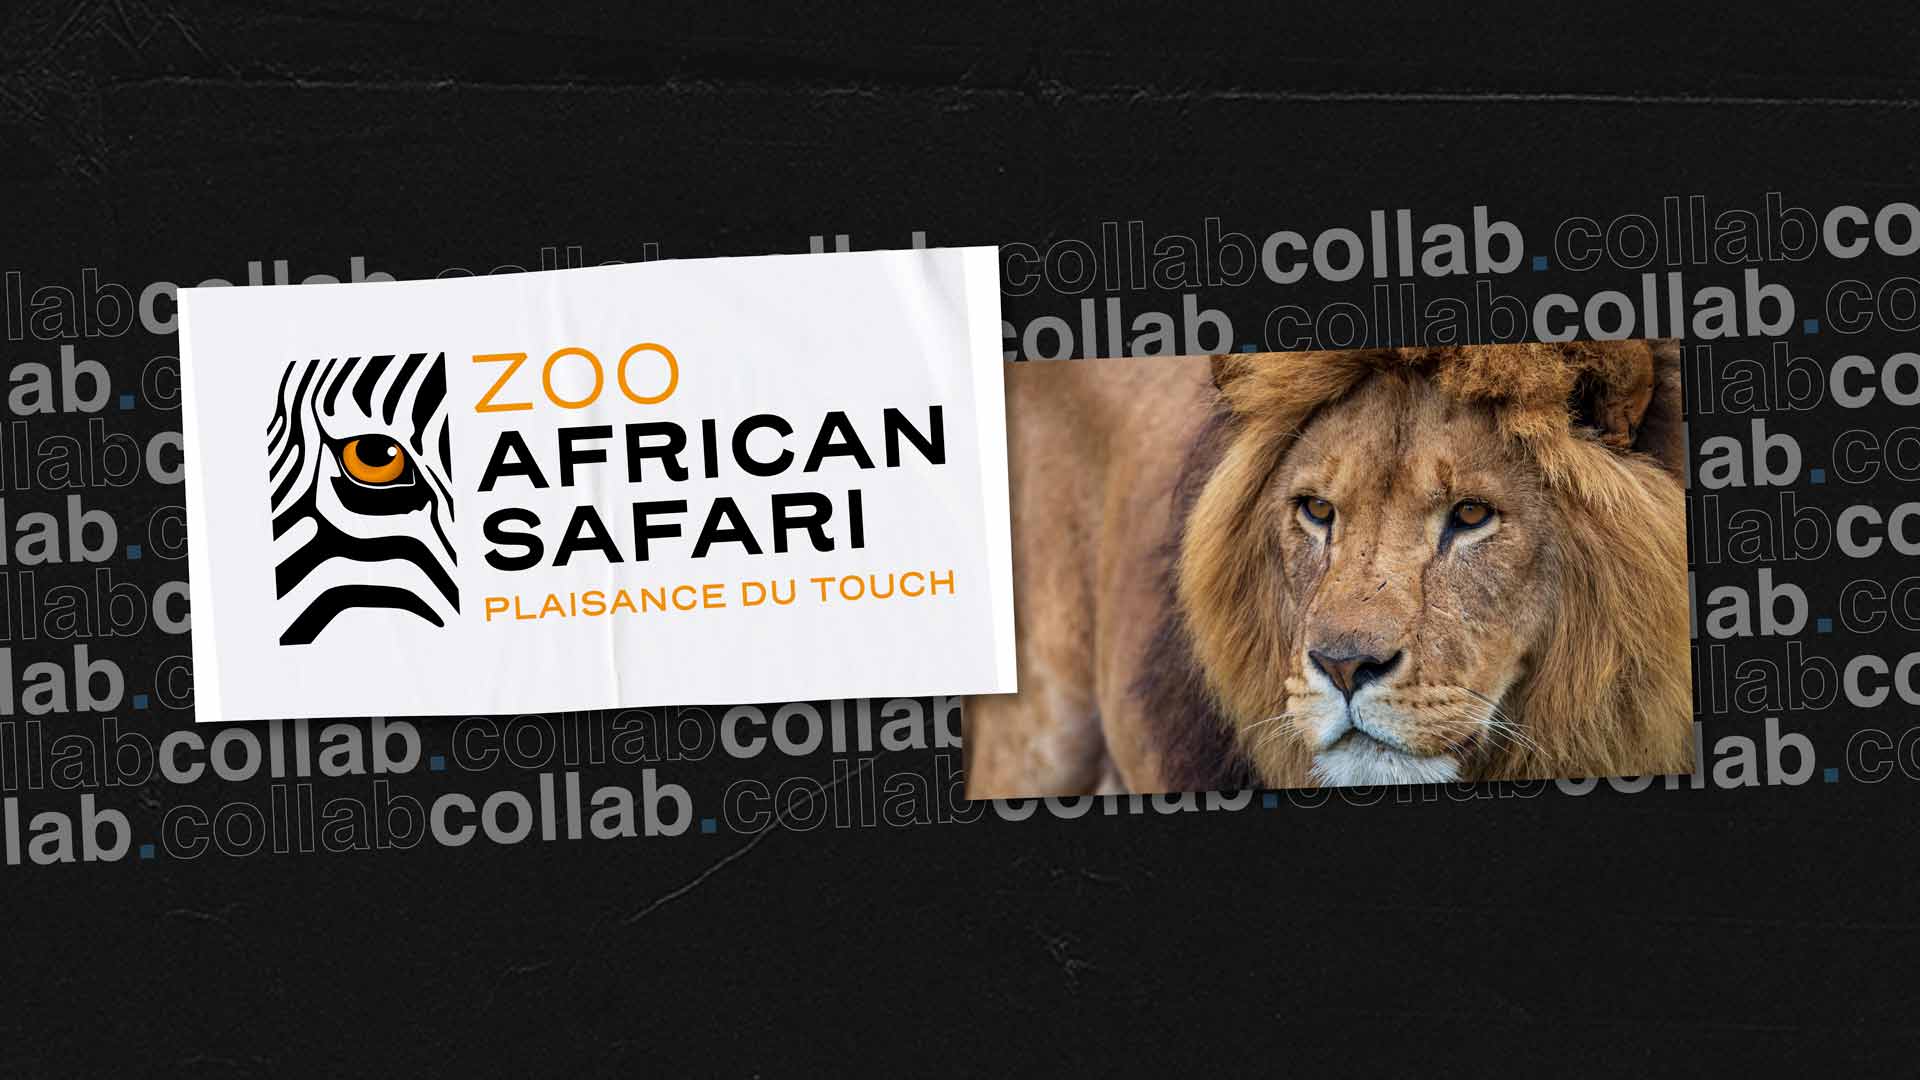 collaboration zoo african safari